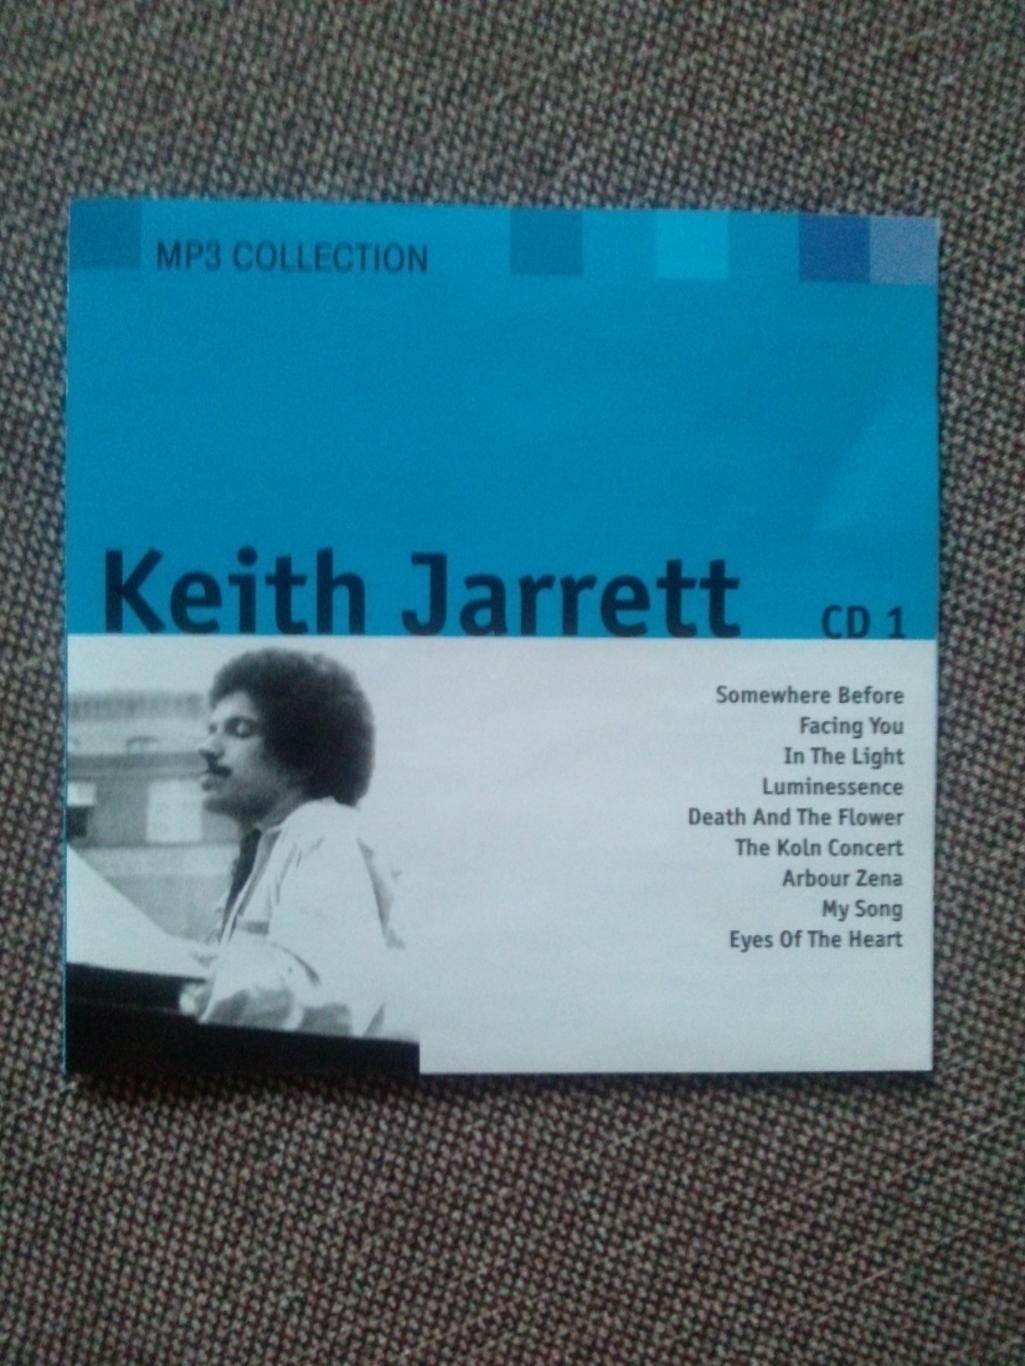 MP - 3 CD : Keith Jarrett (9 альбомов) 1968 - 1979 гг. Джаз Jazz Рок музыка